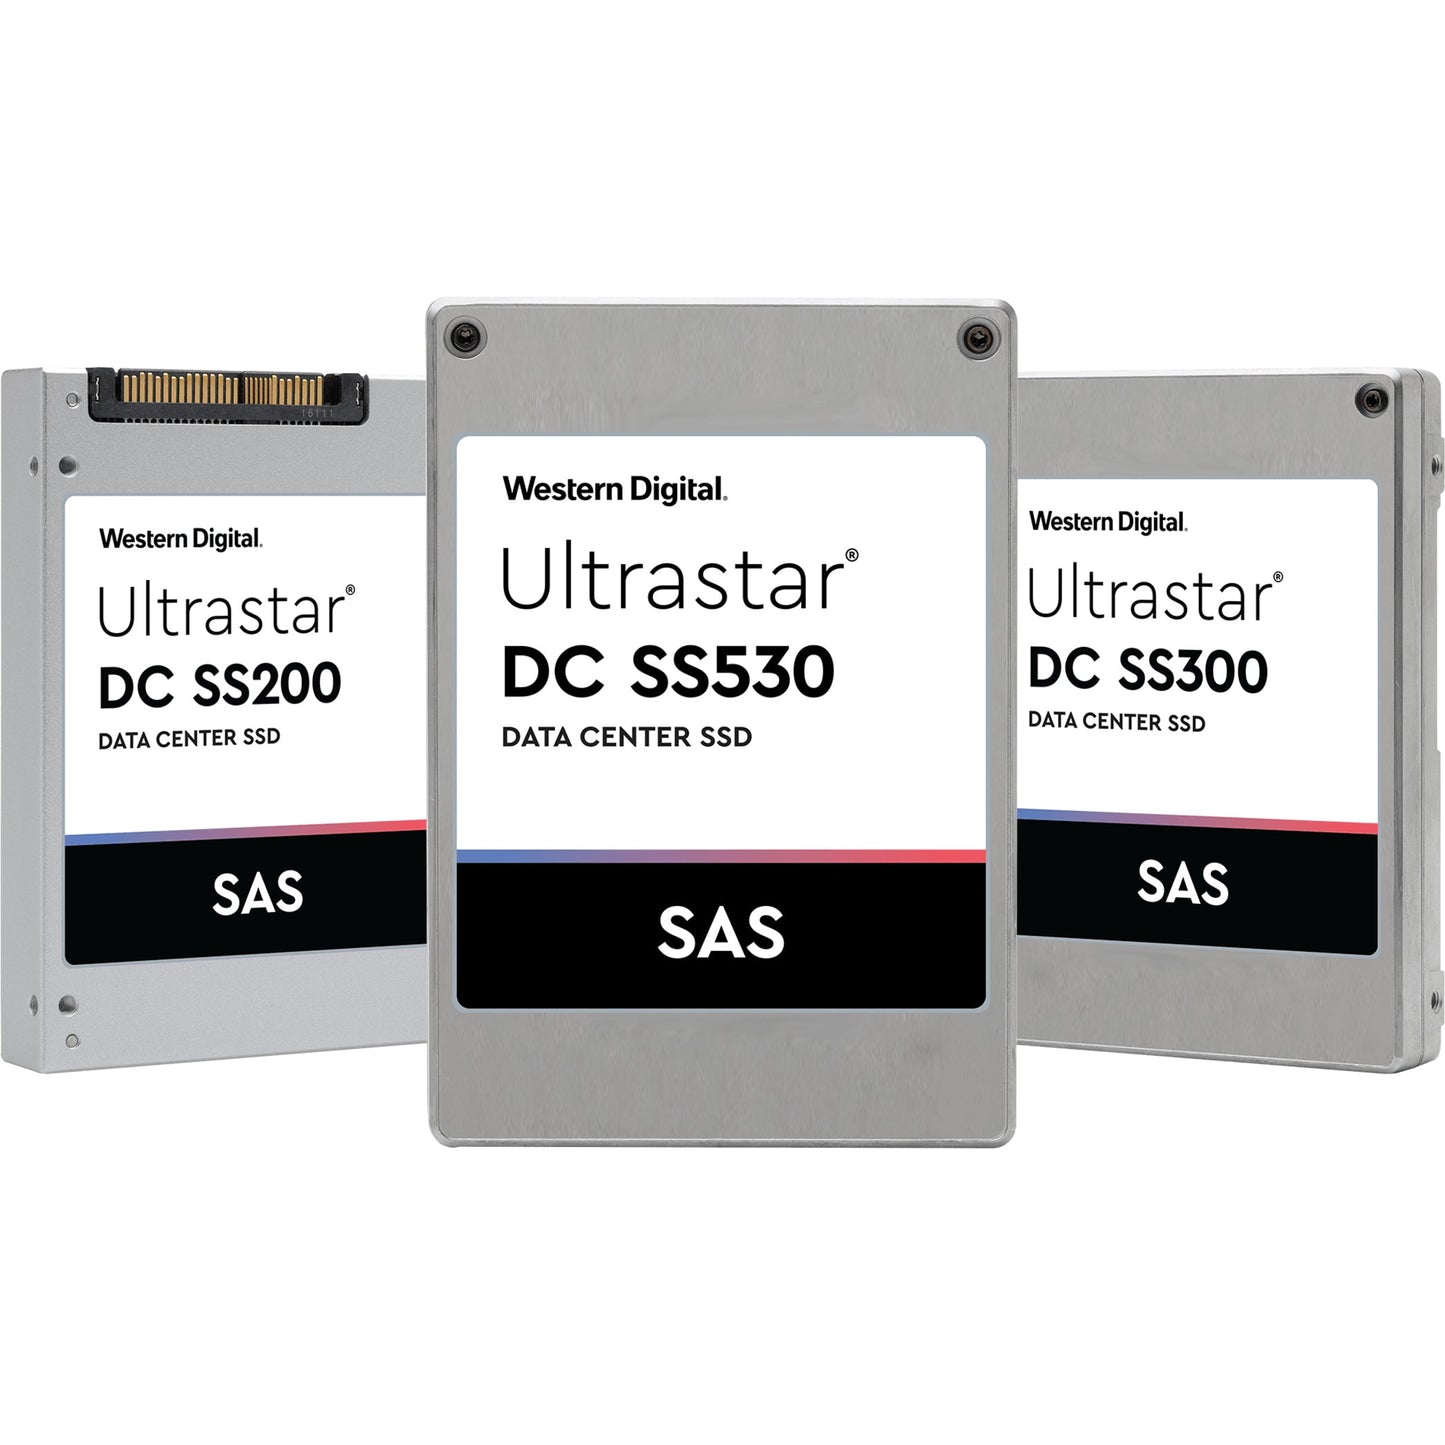 Western Digital Ultrastar DC SS530 WUSTR1548ASS204 480 GB Solid State Drive - 2.5" Internal - SAS (12Gb/s SAS)